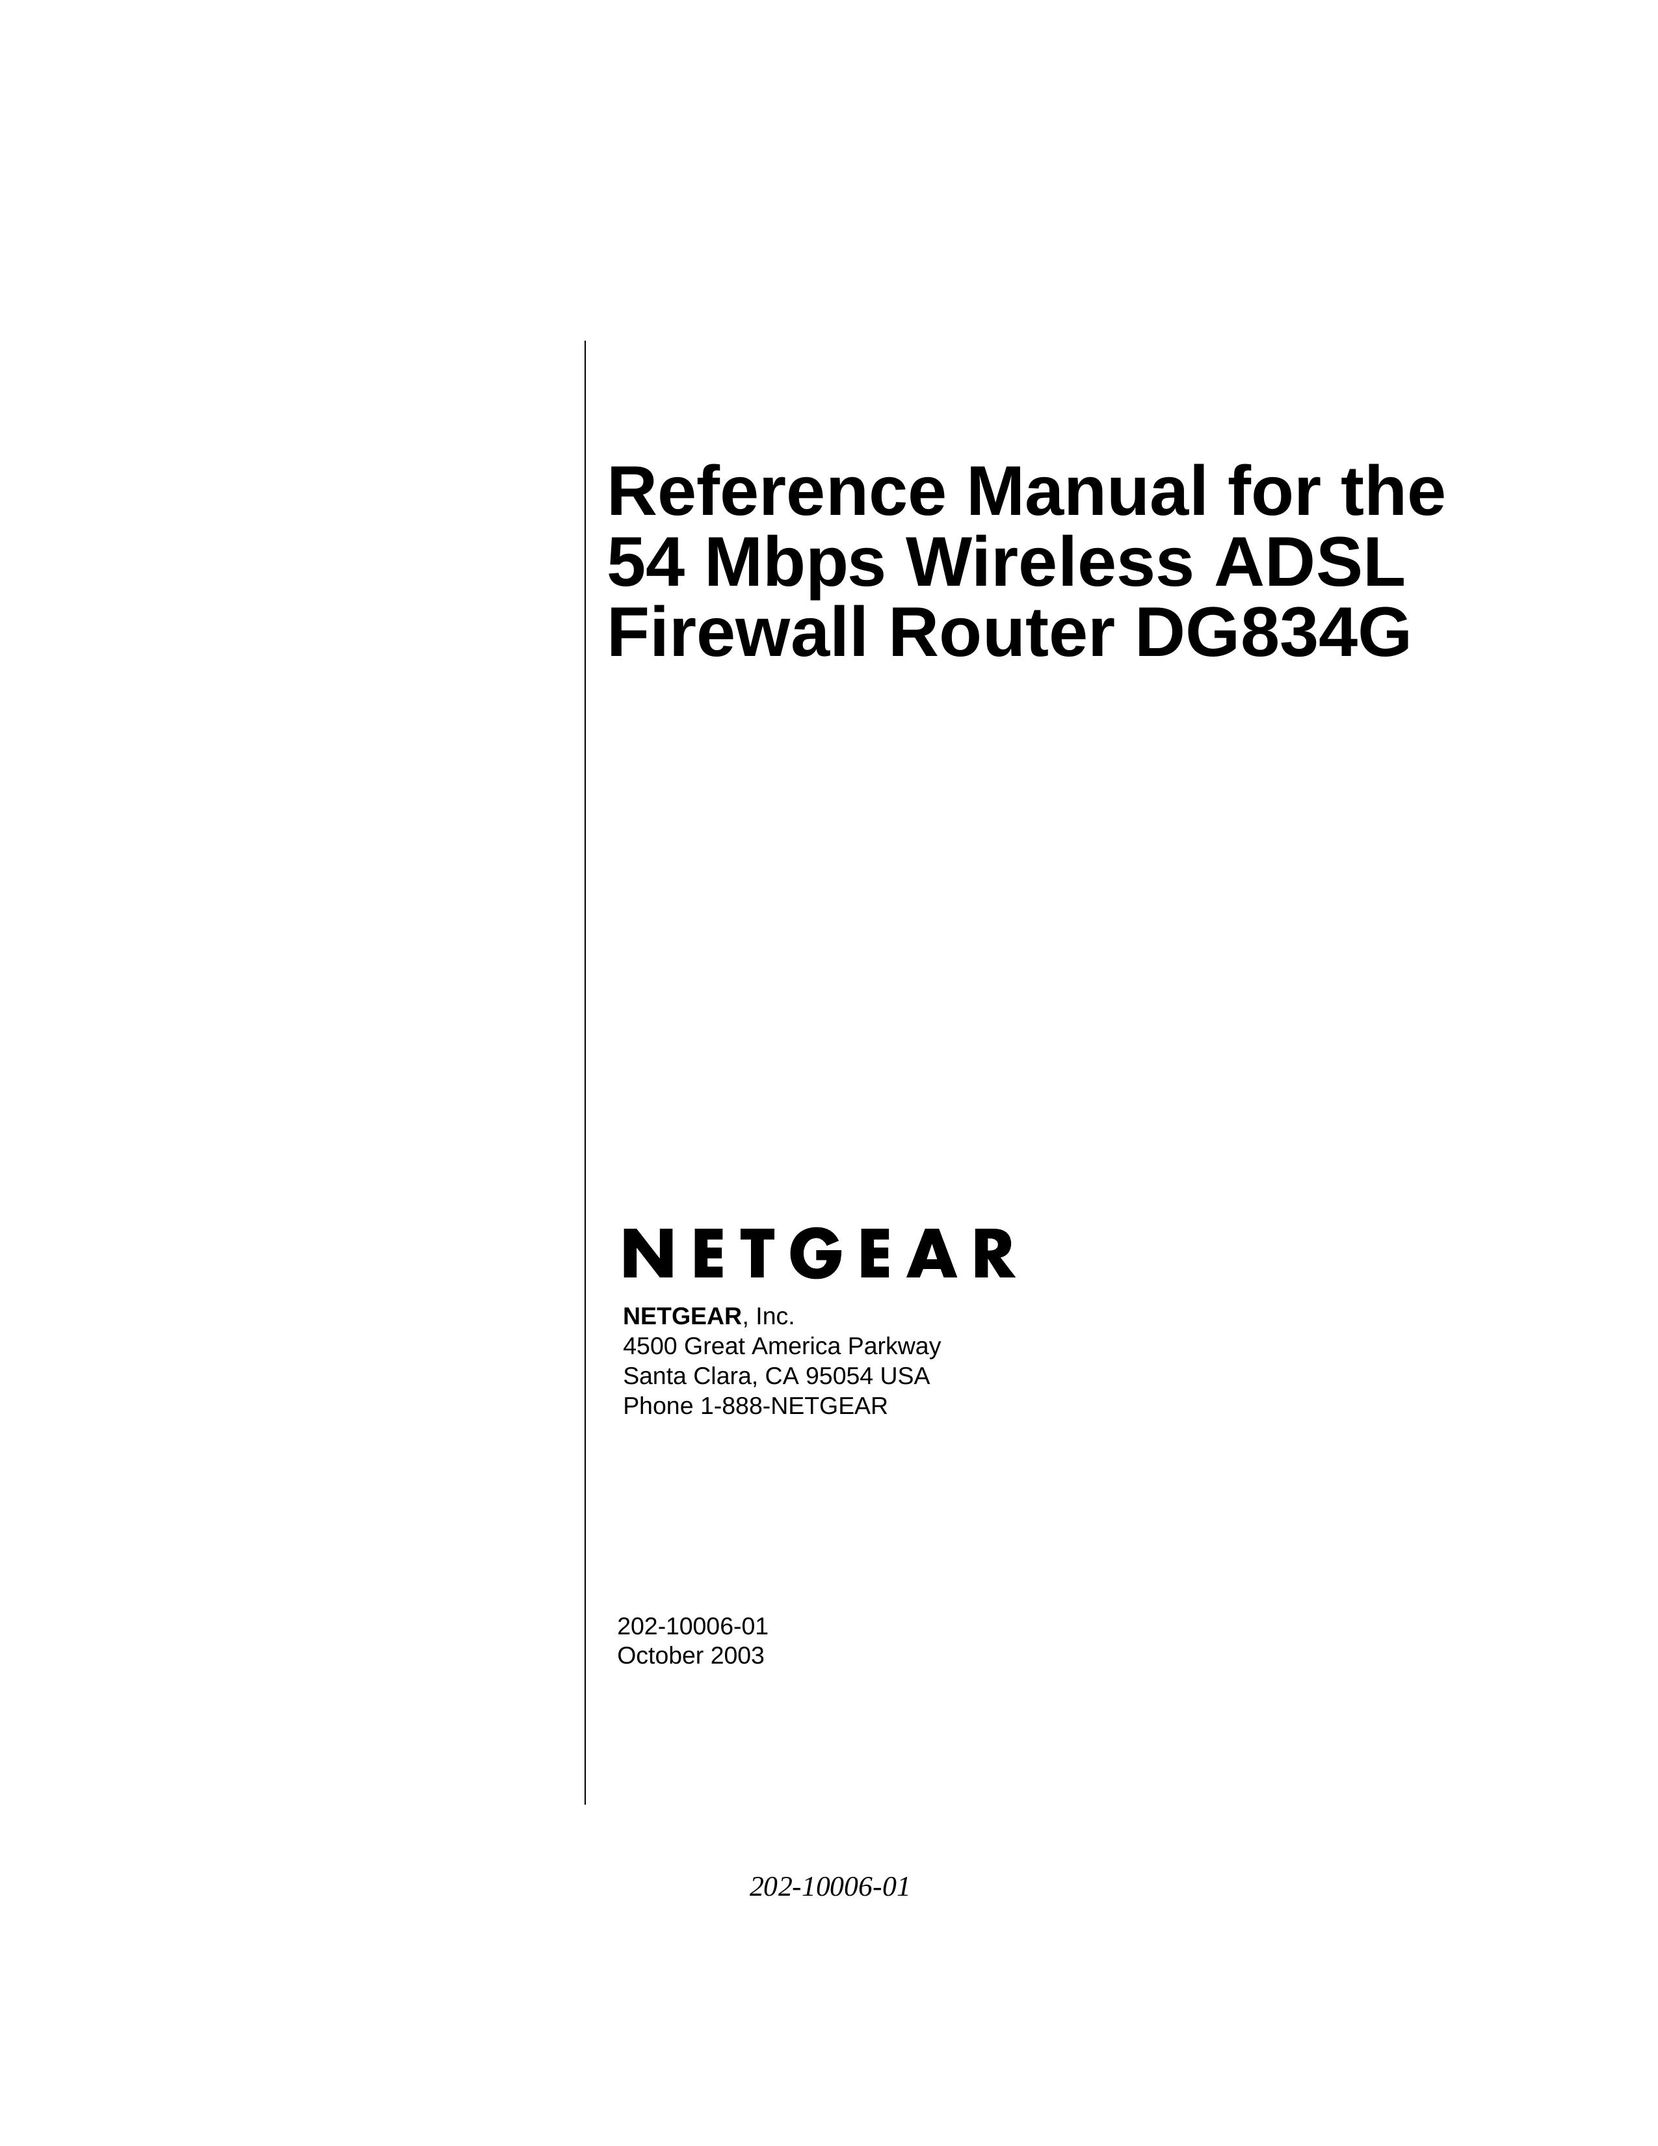 NETGEAR DG834G Network Router User Manual